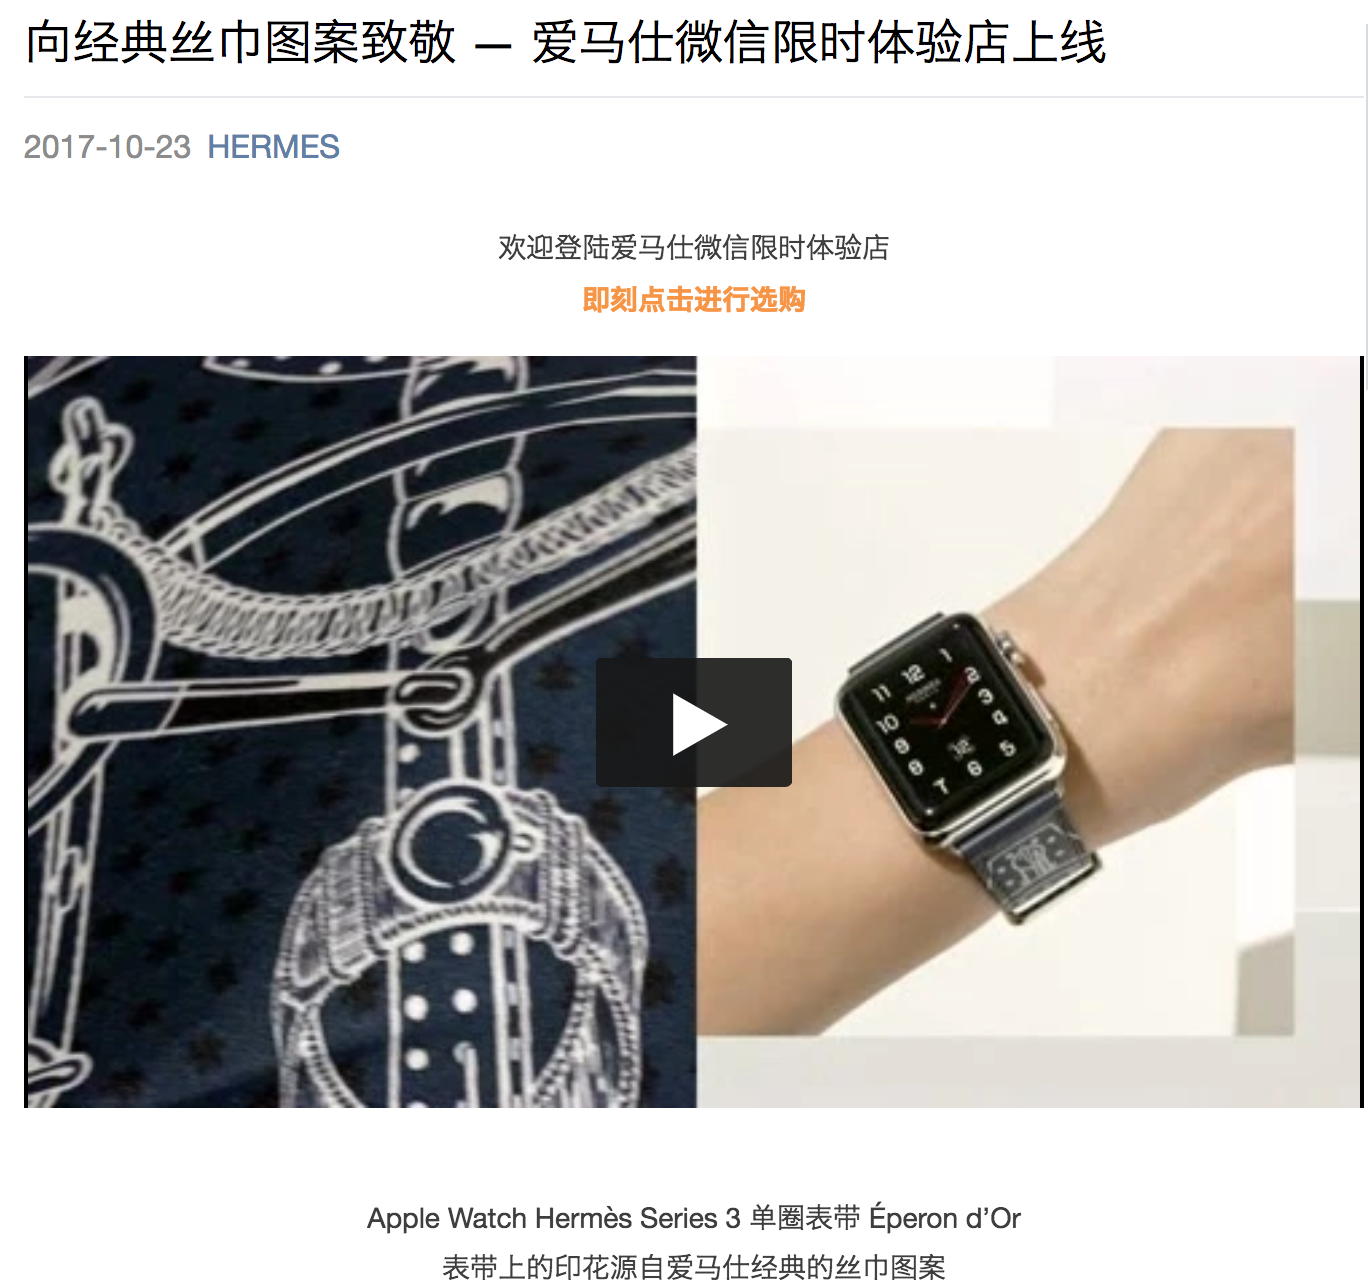 Screenshot of Hermès WeChat post. Photo: Hermes/WeChat